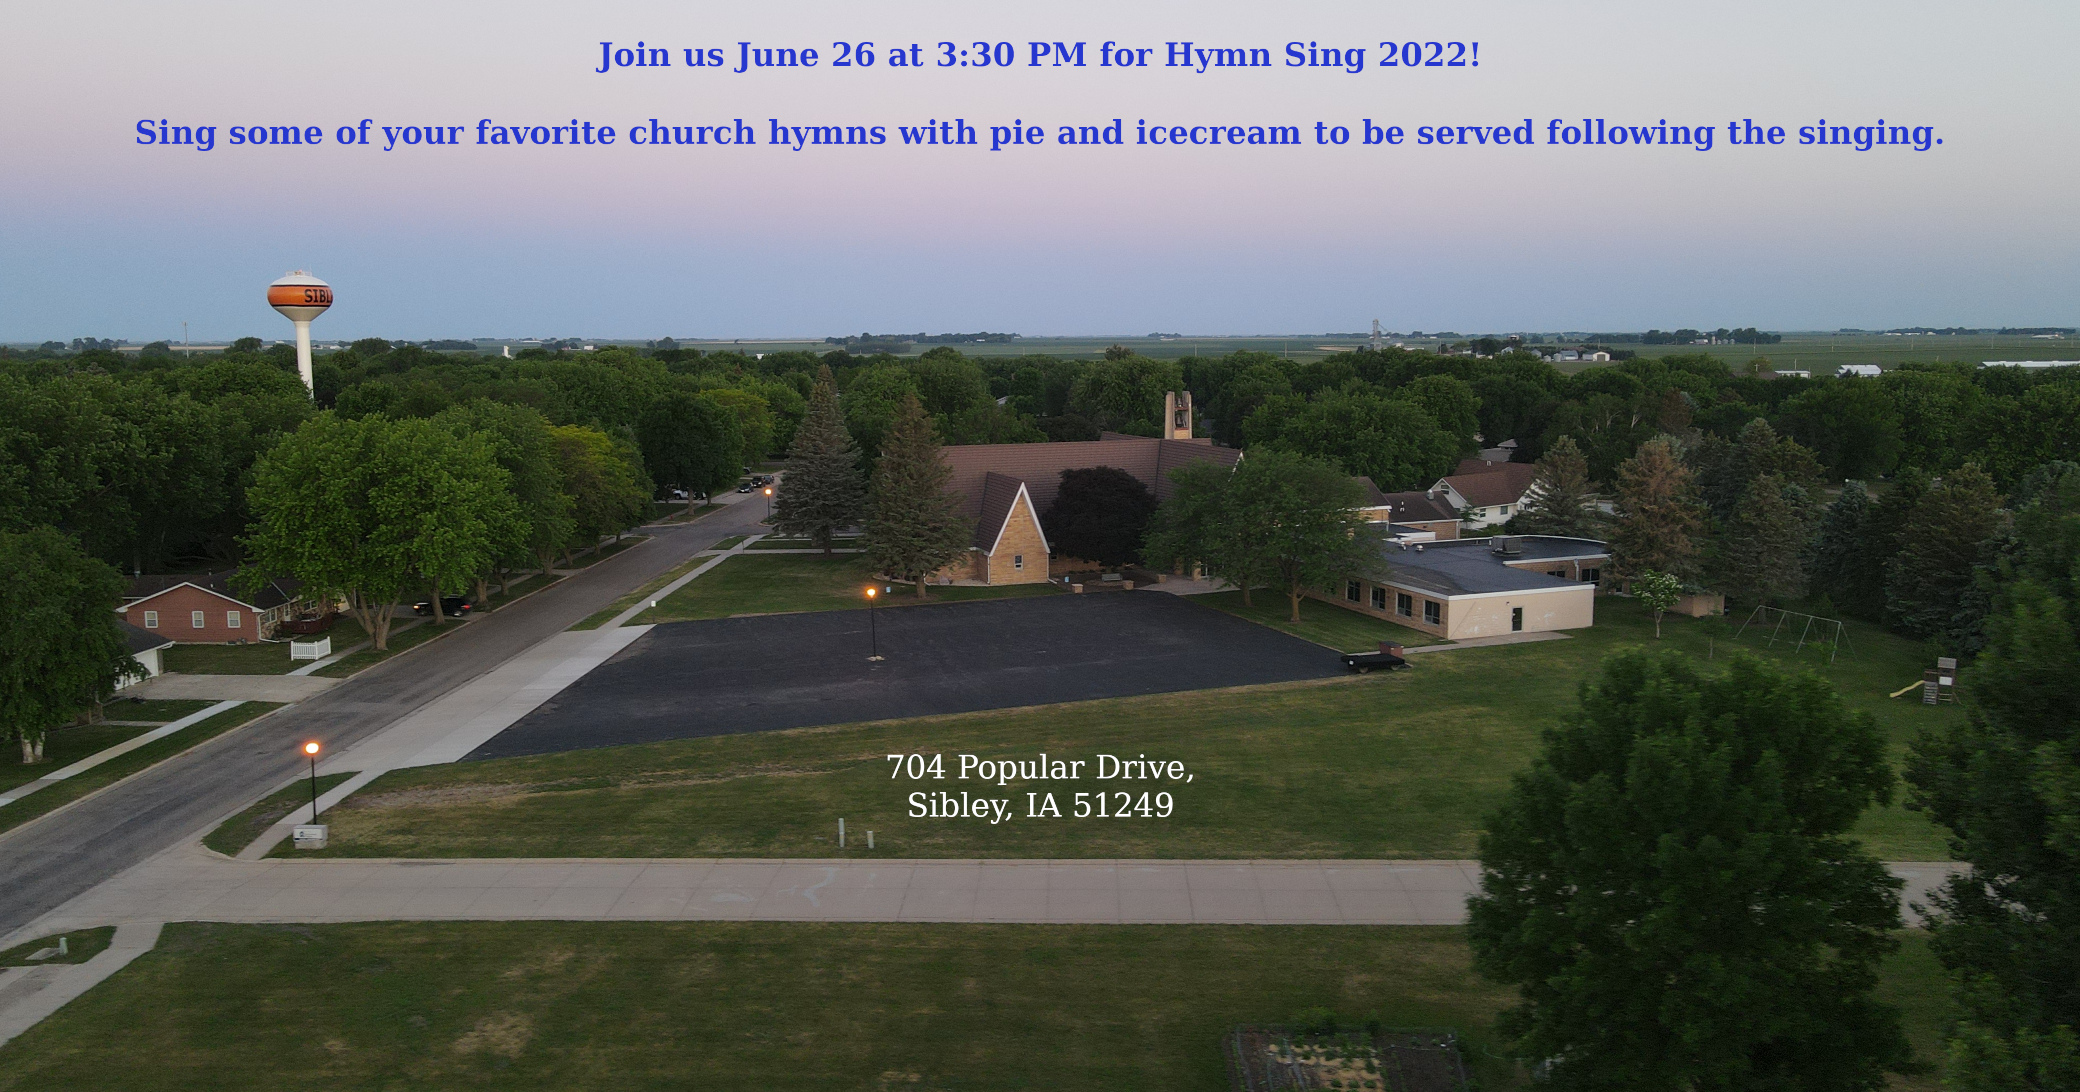 Hymn Sing June 26 3:30 PM